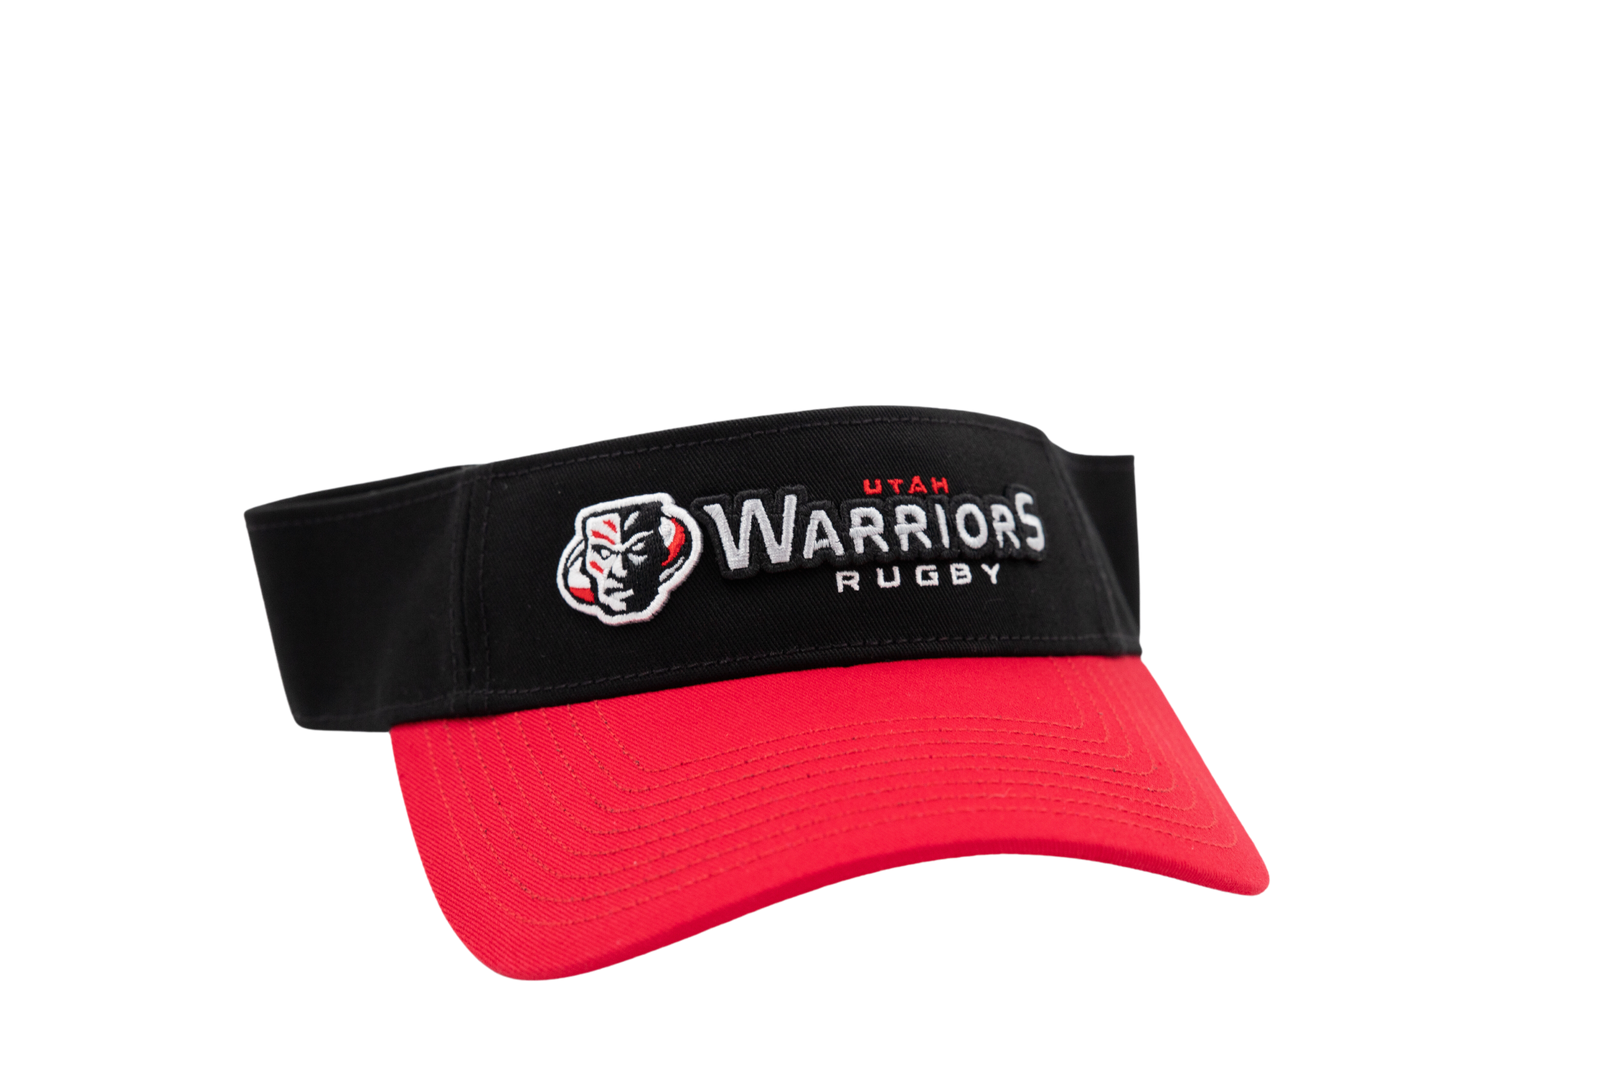 Warriors Visor - Utah Warriors Rugby